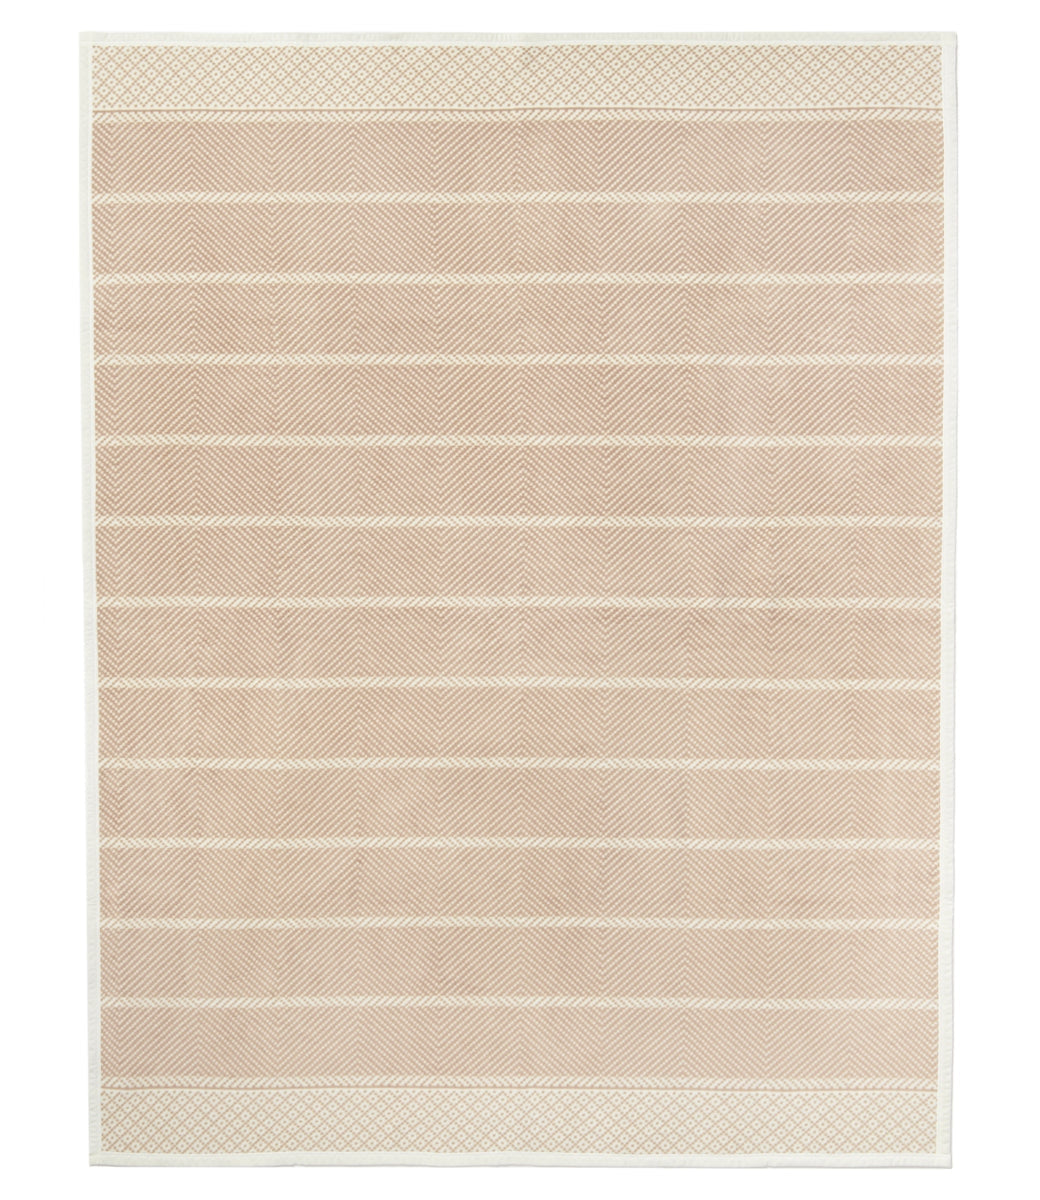 Image of ChappyWrap Blanket-Old Port Herringbone Tan on a white background